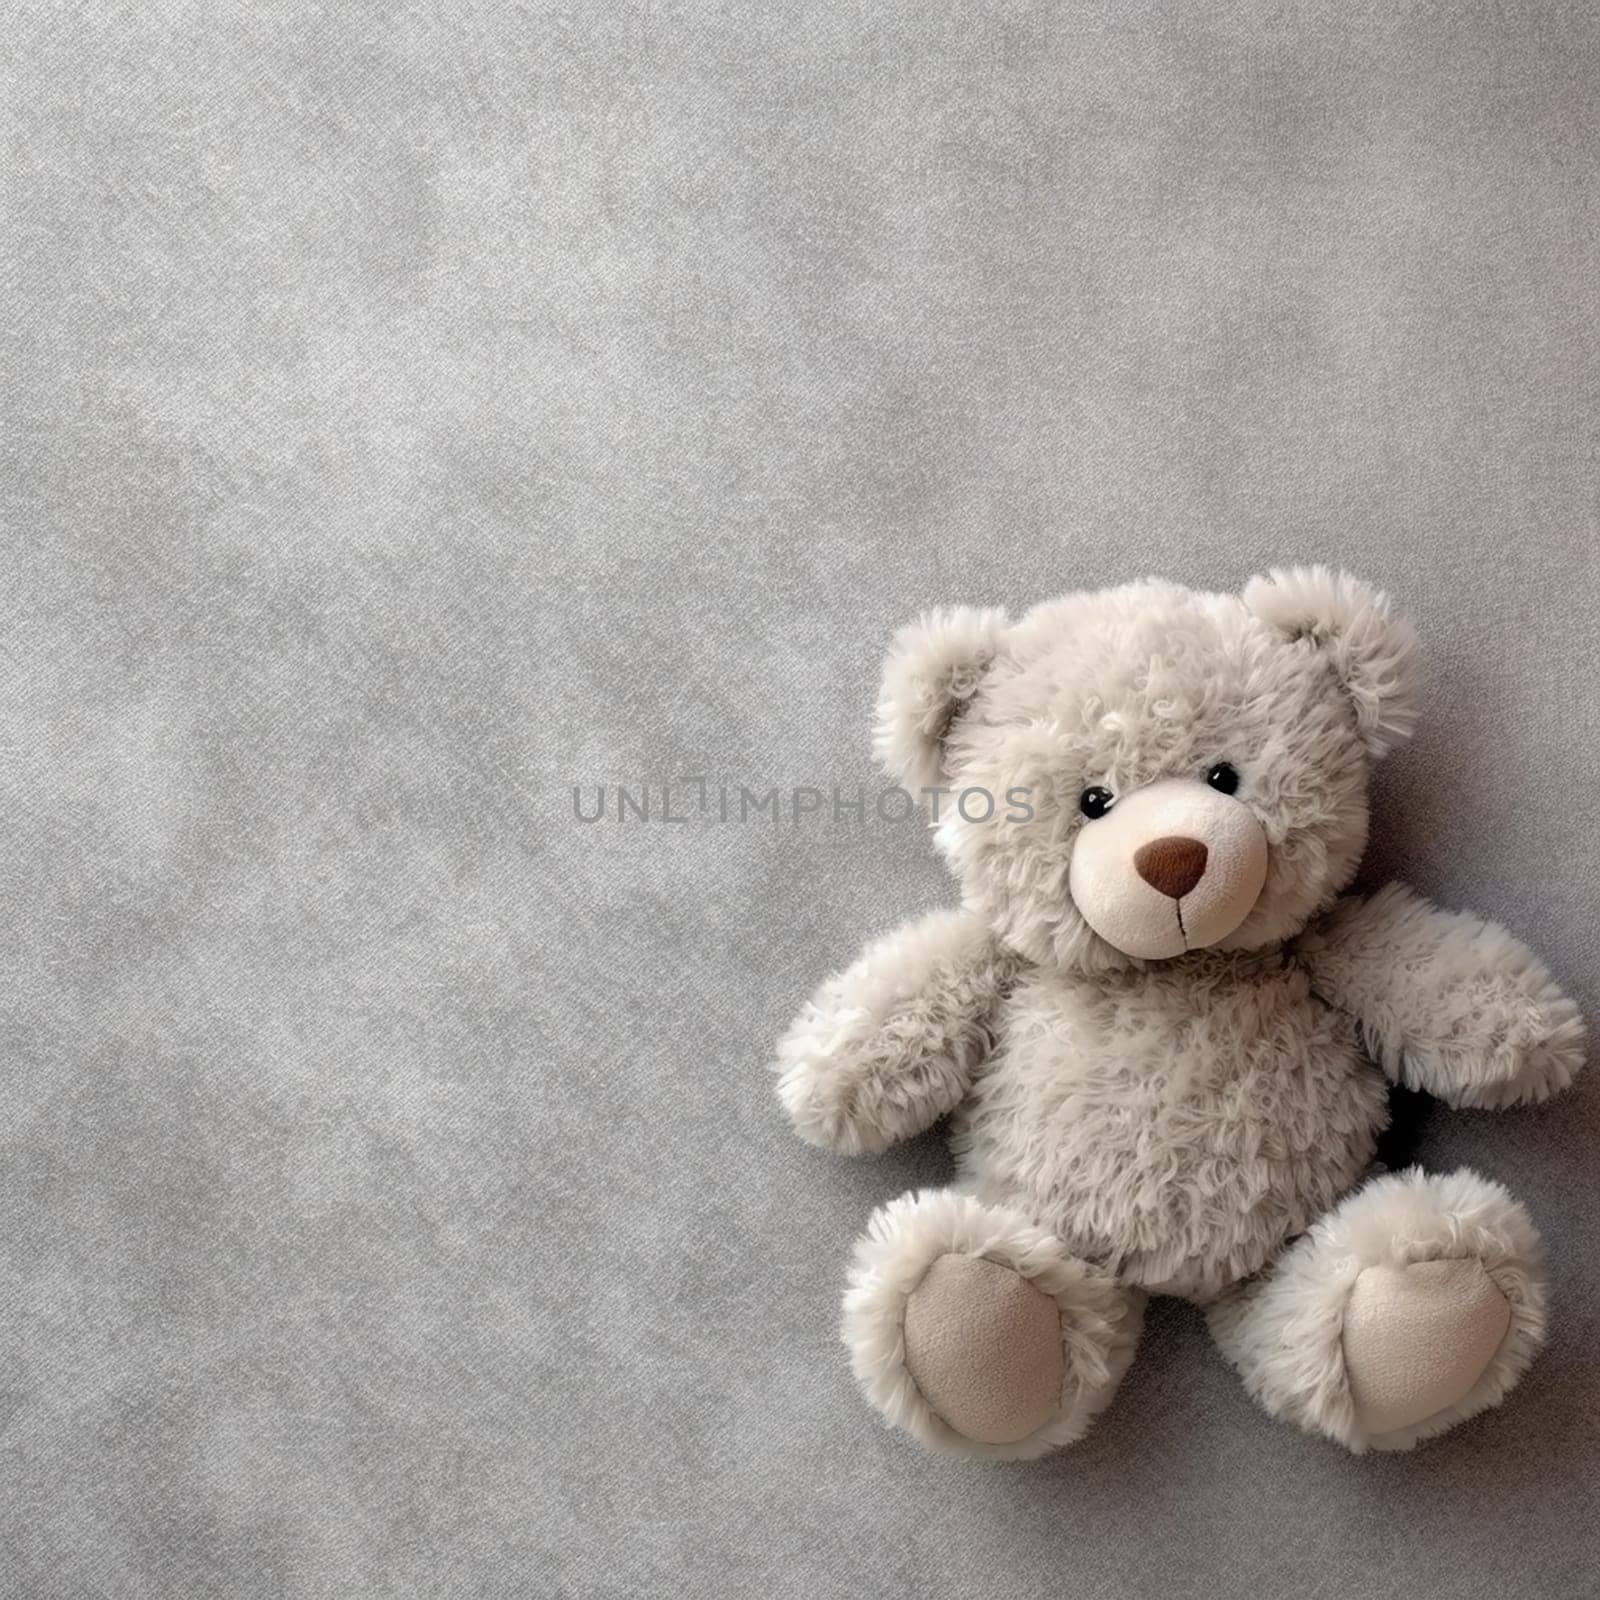 Plush teddy bear lying on a textured grey background. by Hype2art